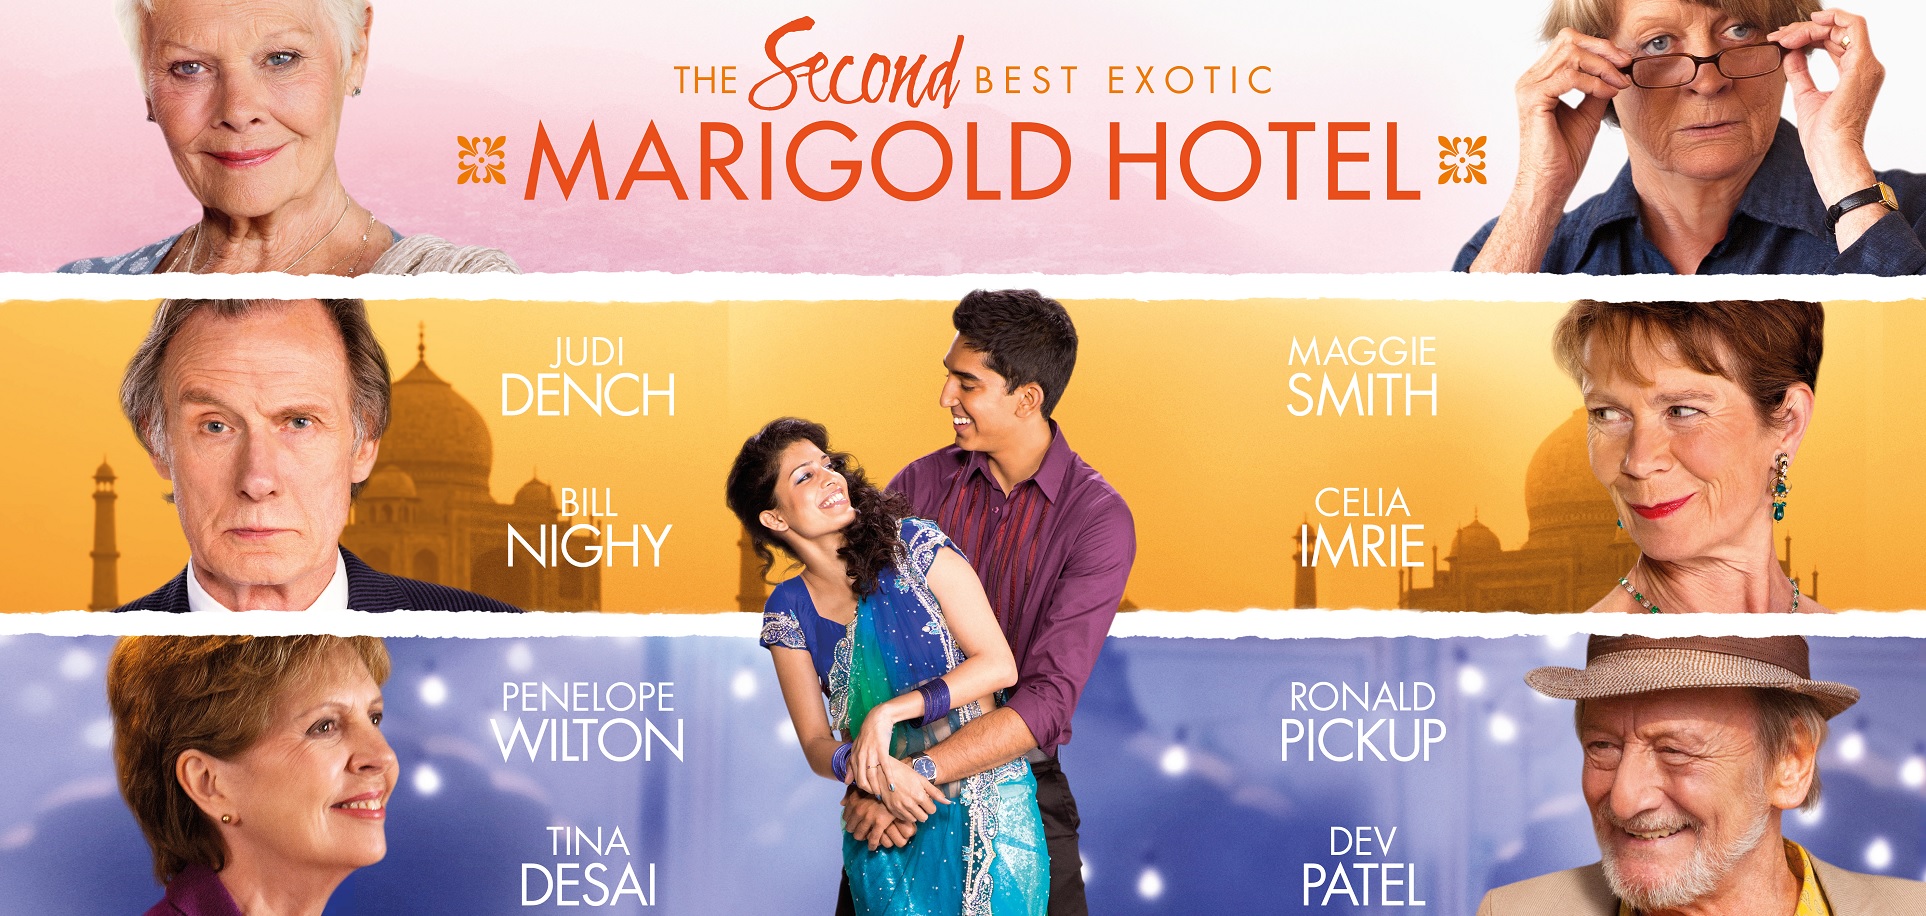 The-Second-Best-Exotic-Marigold-Hotel-UK-Quad-Poster-slice